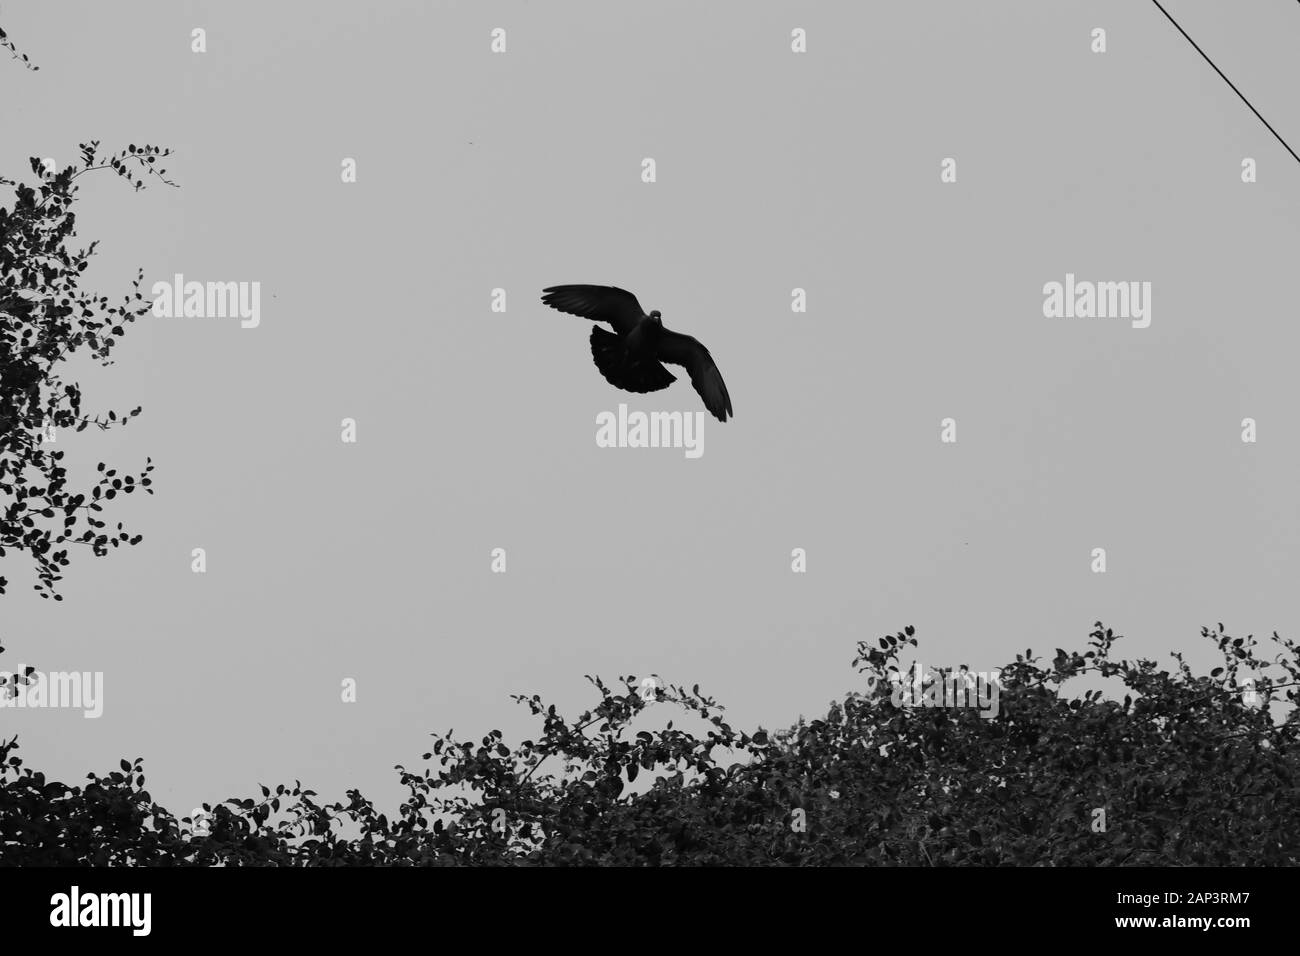 flying white pigeon bird on black background Stock Photo